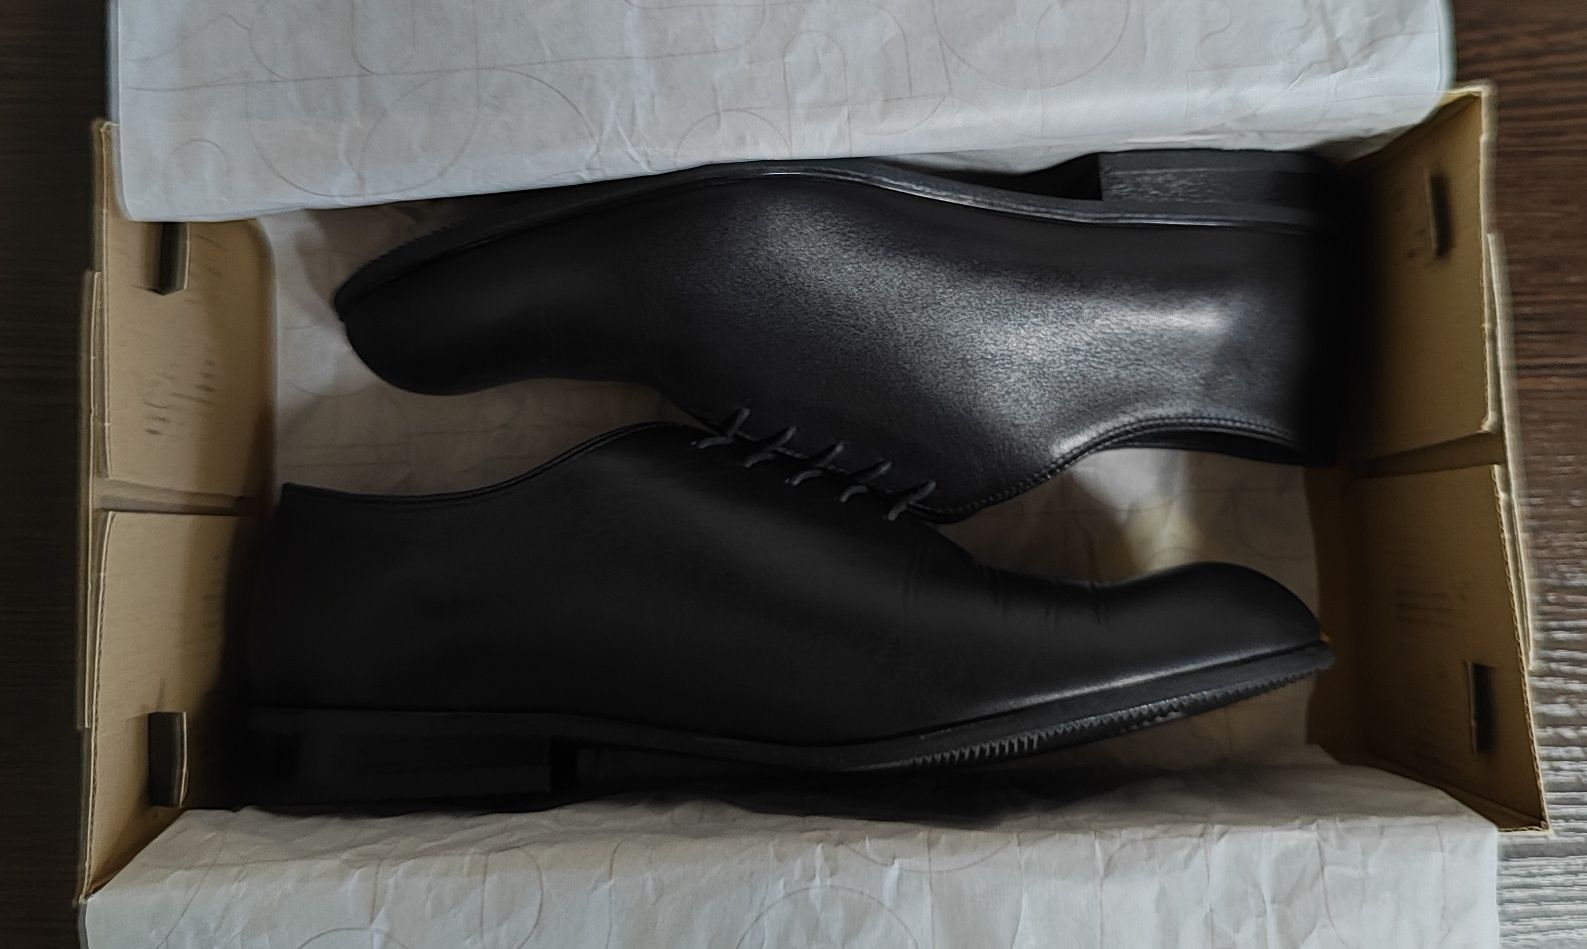 Класичні туфлі оксфорди, ТМ ІКОС, Made in UA